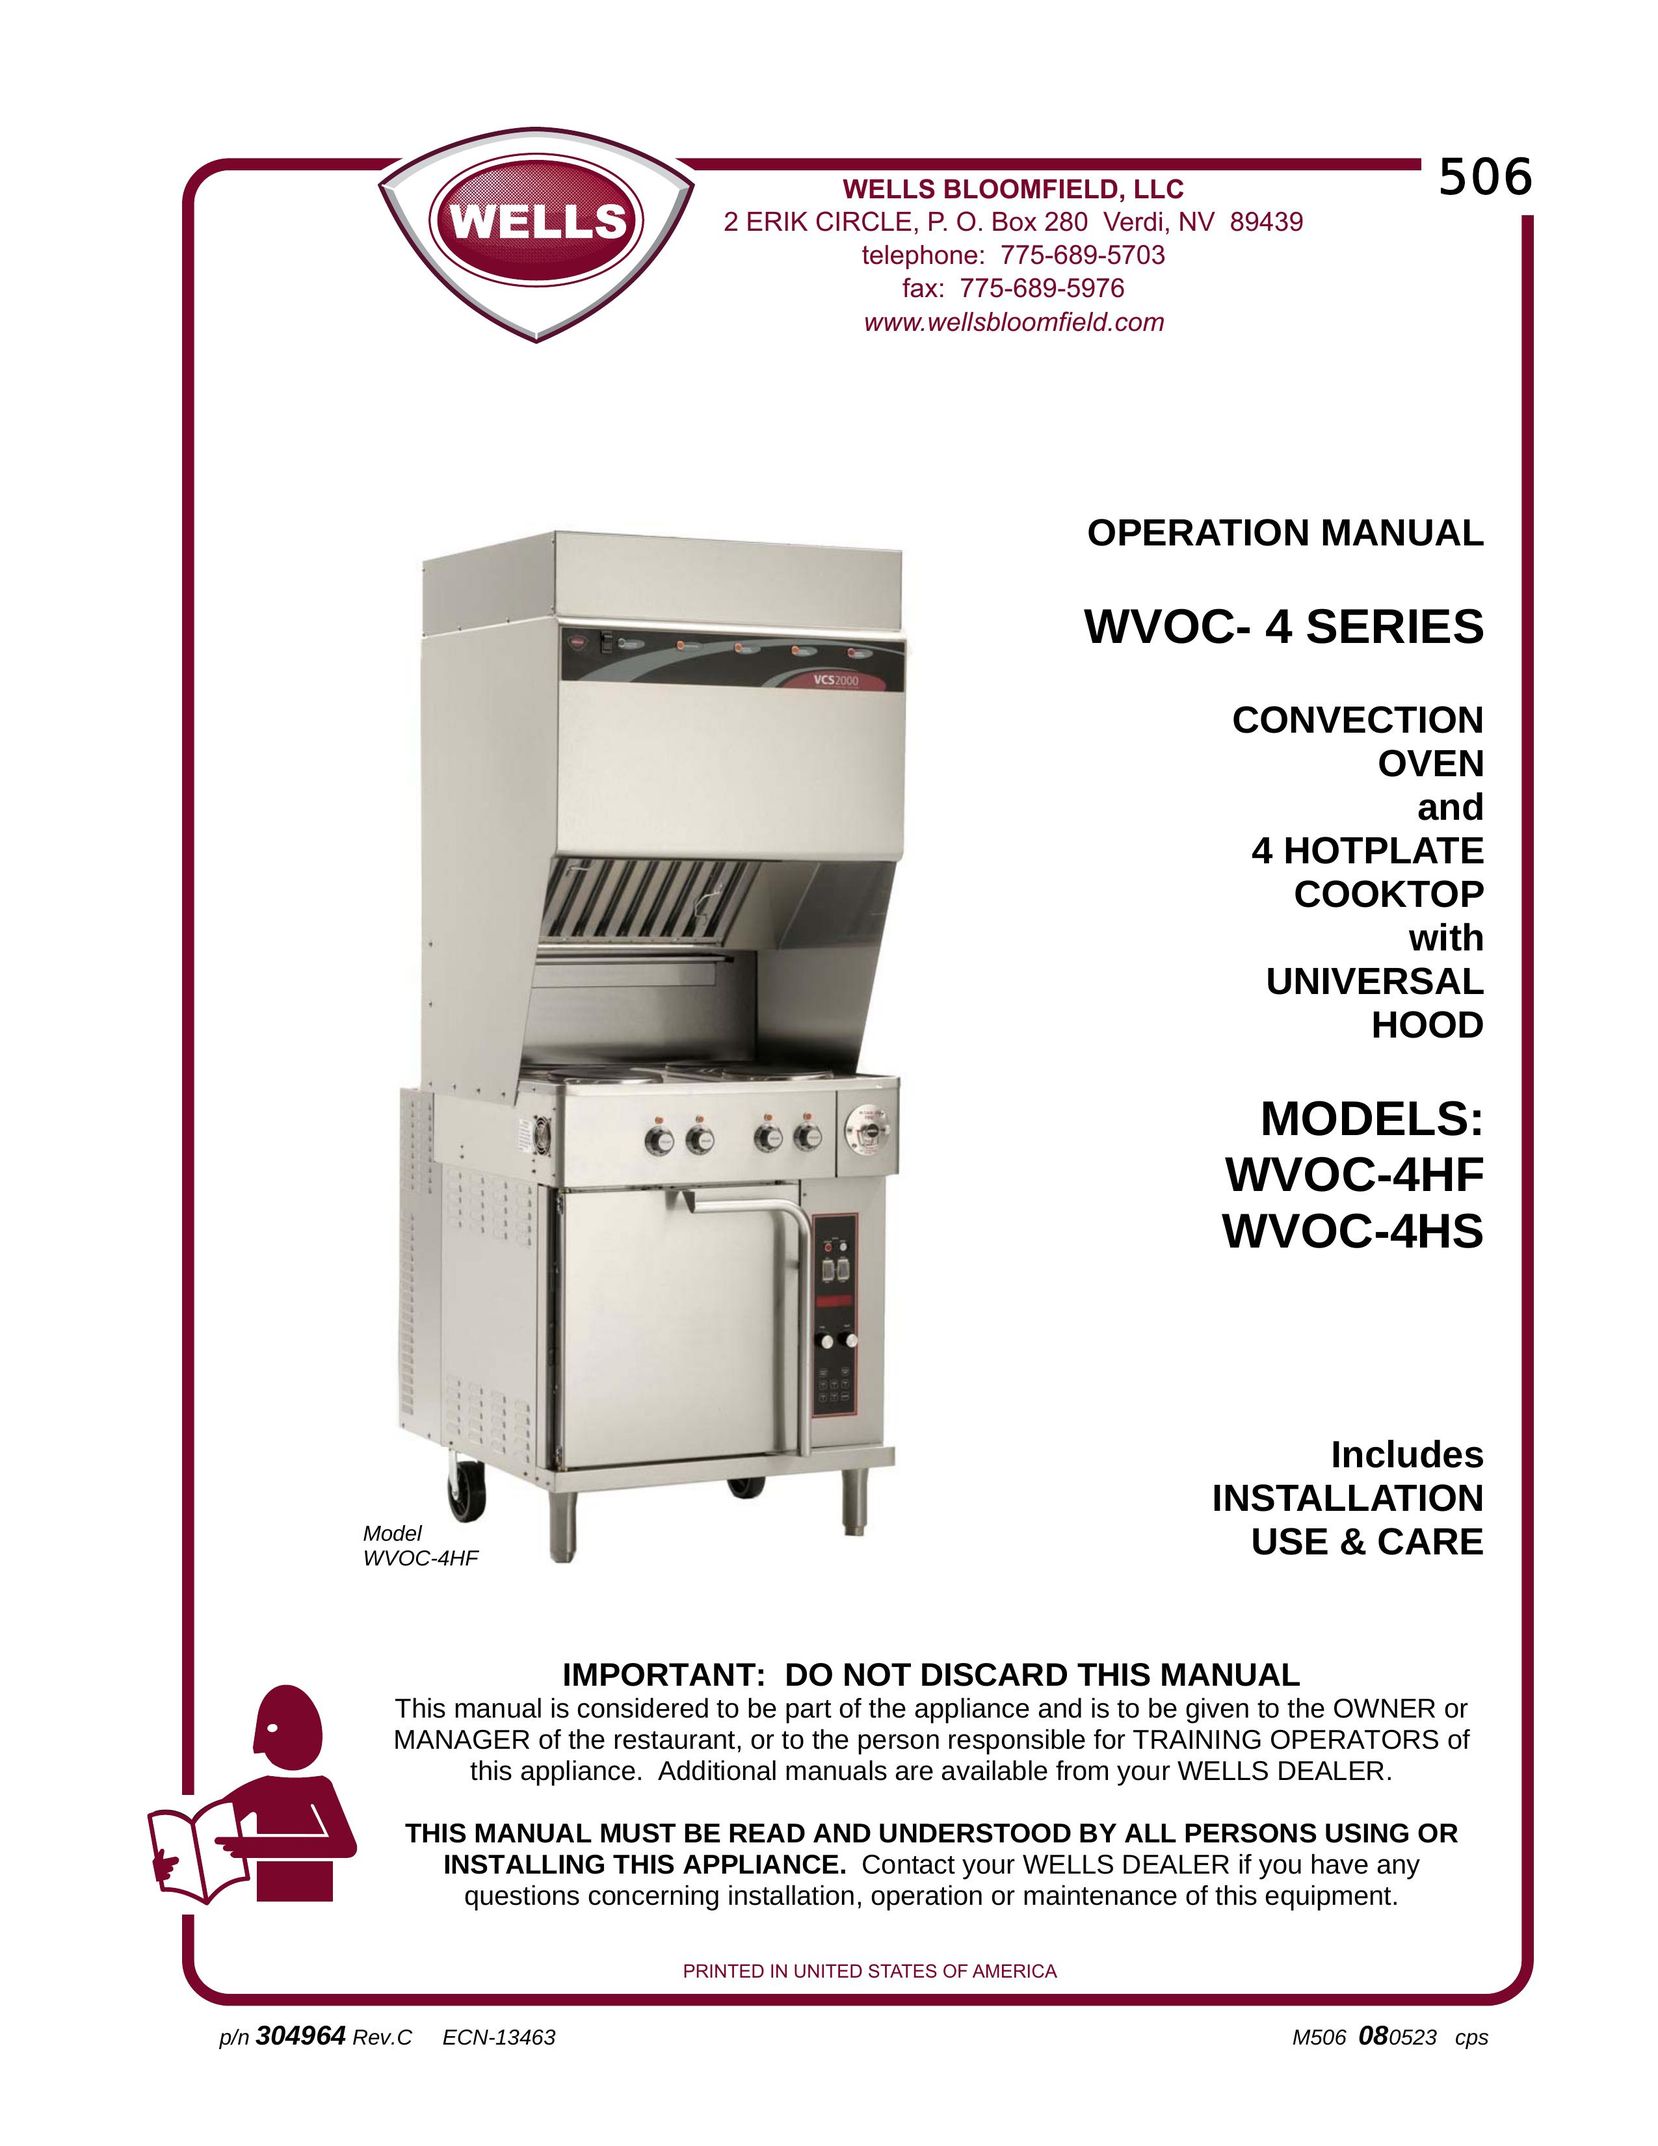 Wells WVOC-4HS Convection Oven User Manual